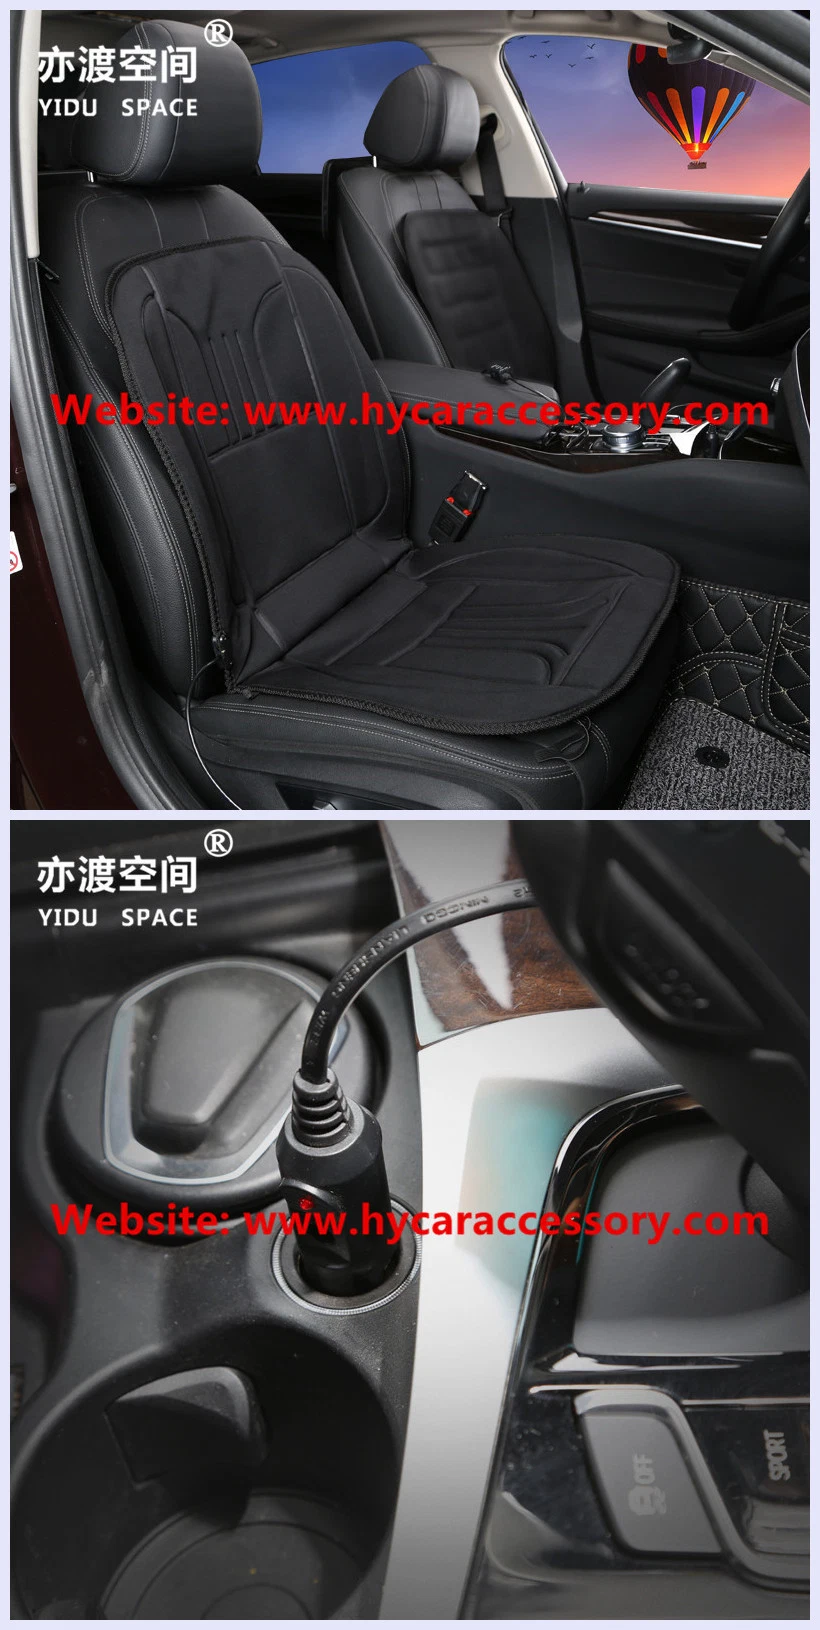 12V Heated Auto Car Seat Cushion Warmer Heater in Winter